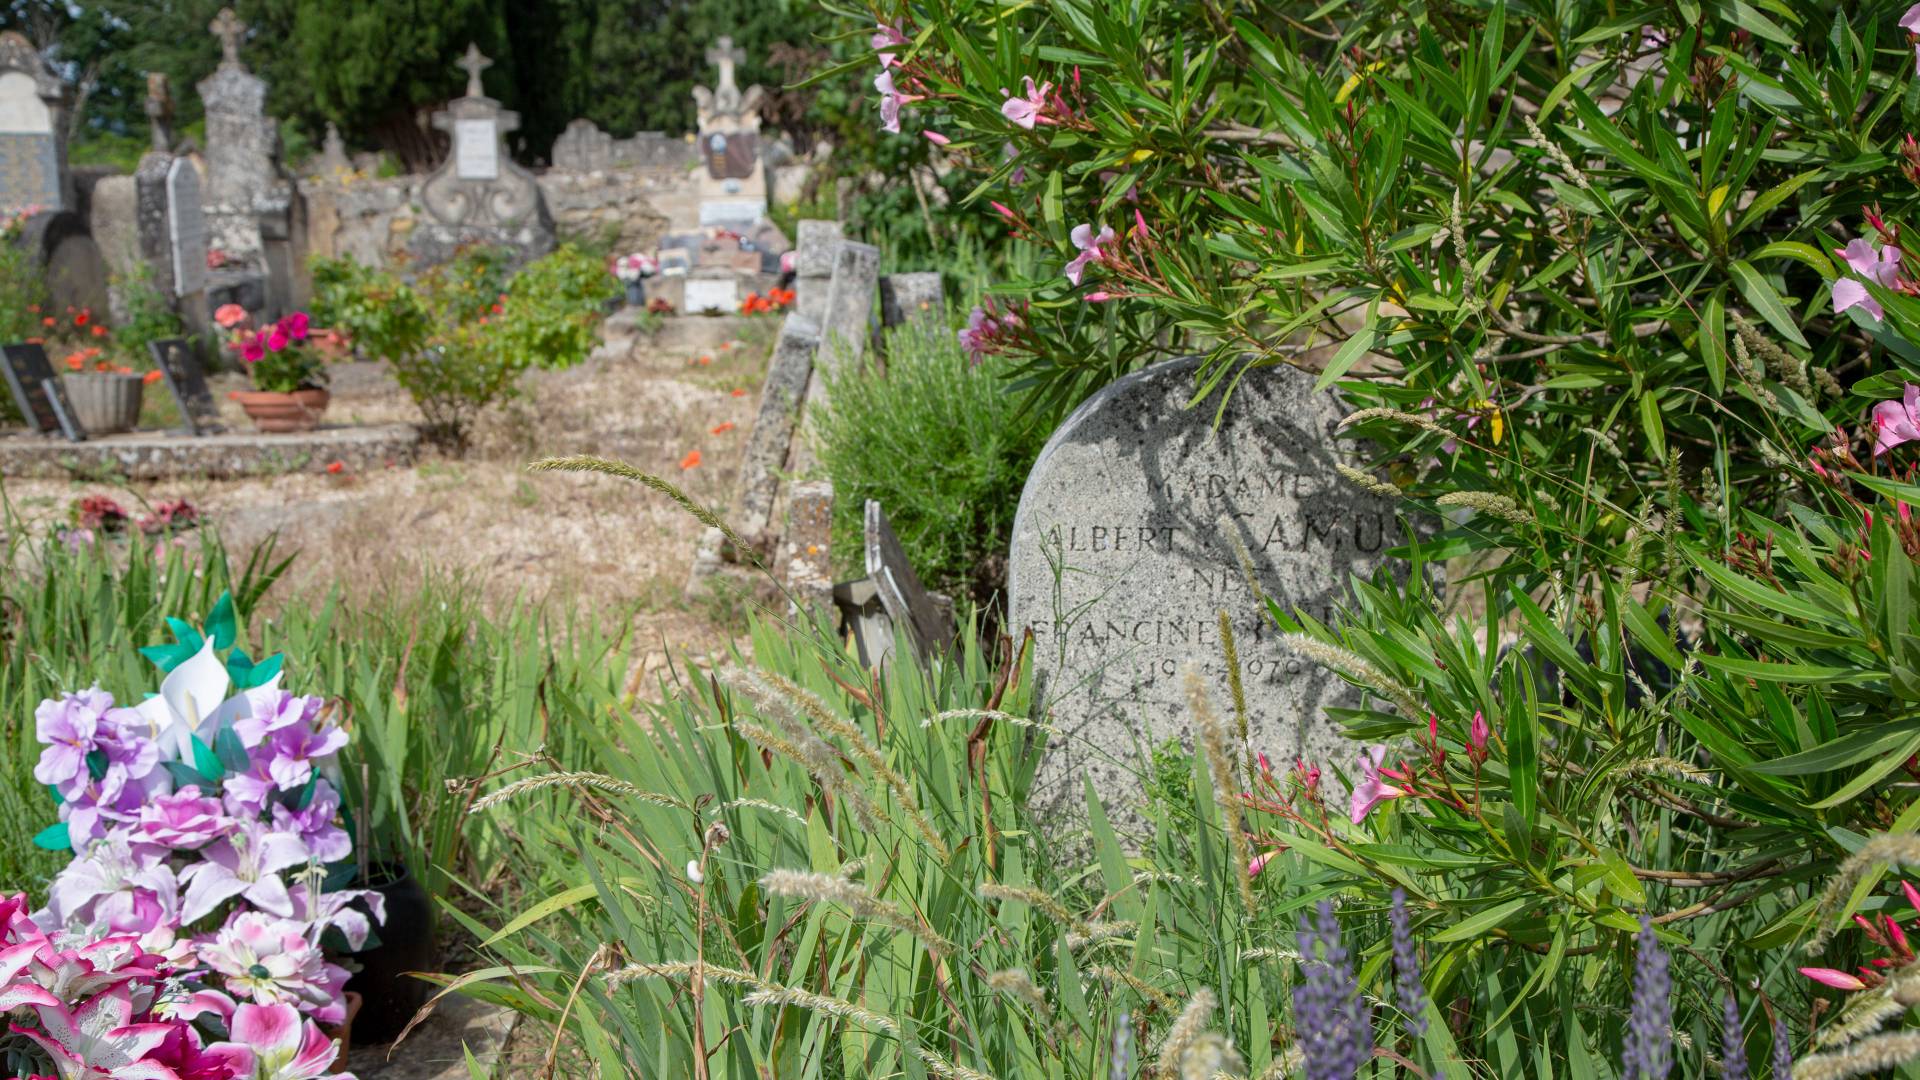 Albert Camus' gravestone in France